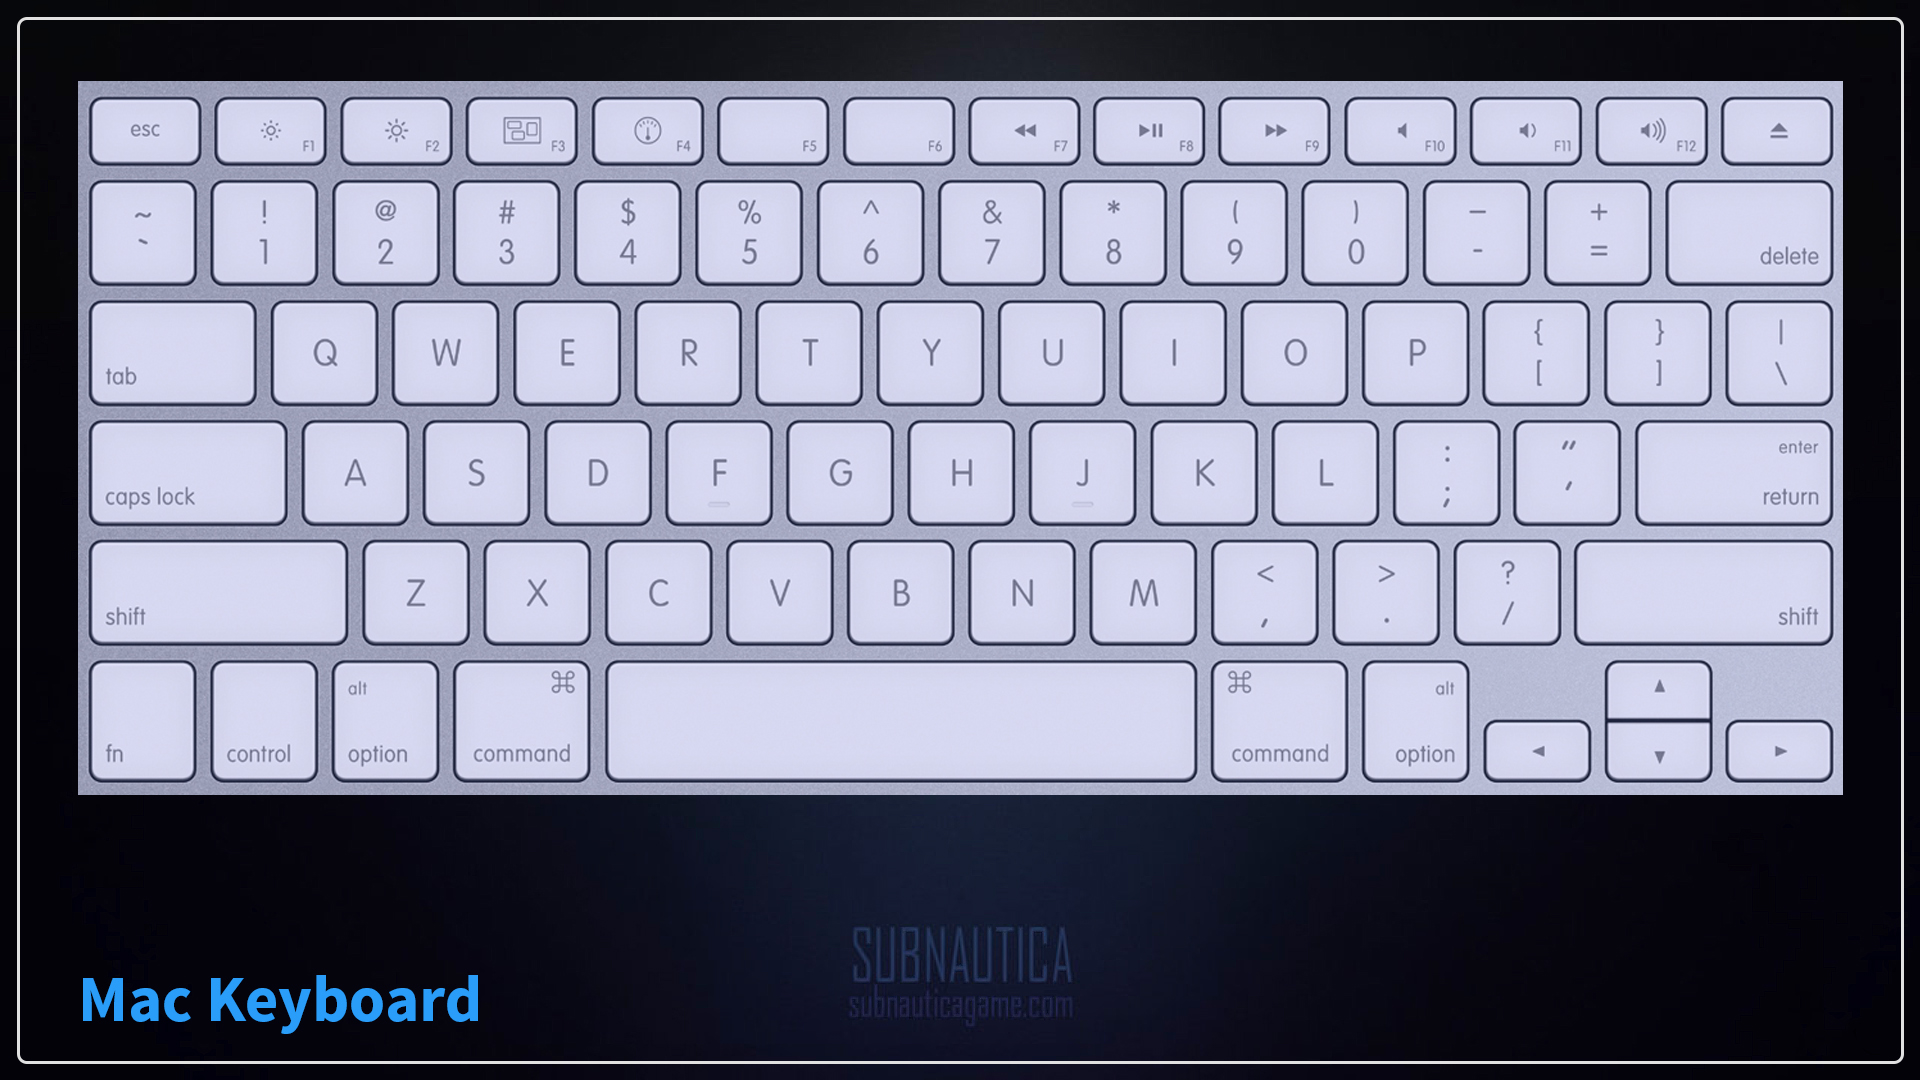 Enter shift клавиши. Клавиатура Мак. Клавиша Return на Mac. Shift на клавиатуре Mac. Кнопка Space на клавиатуре Mac.